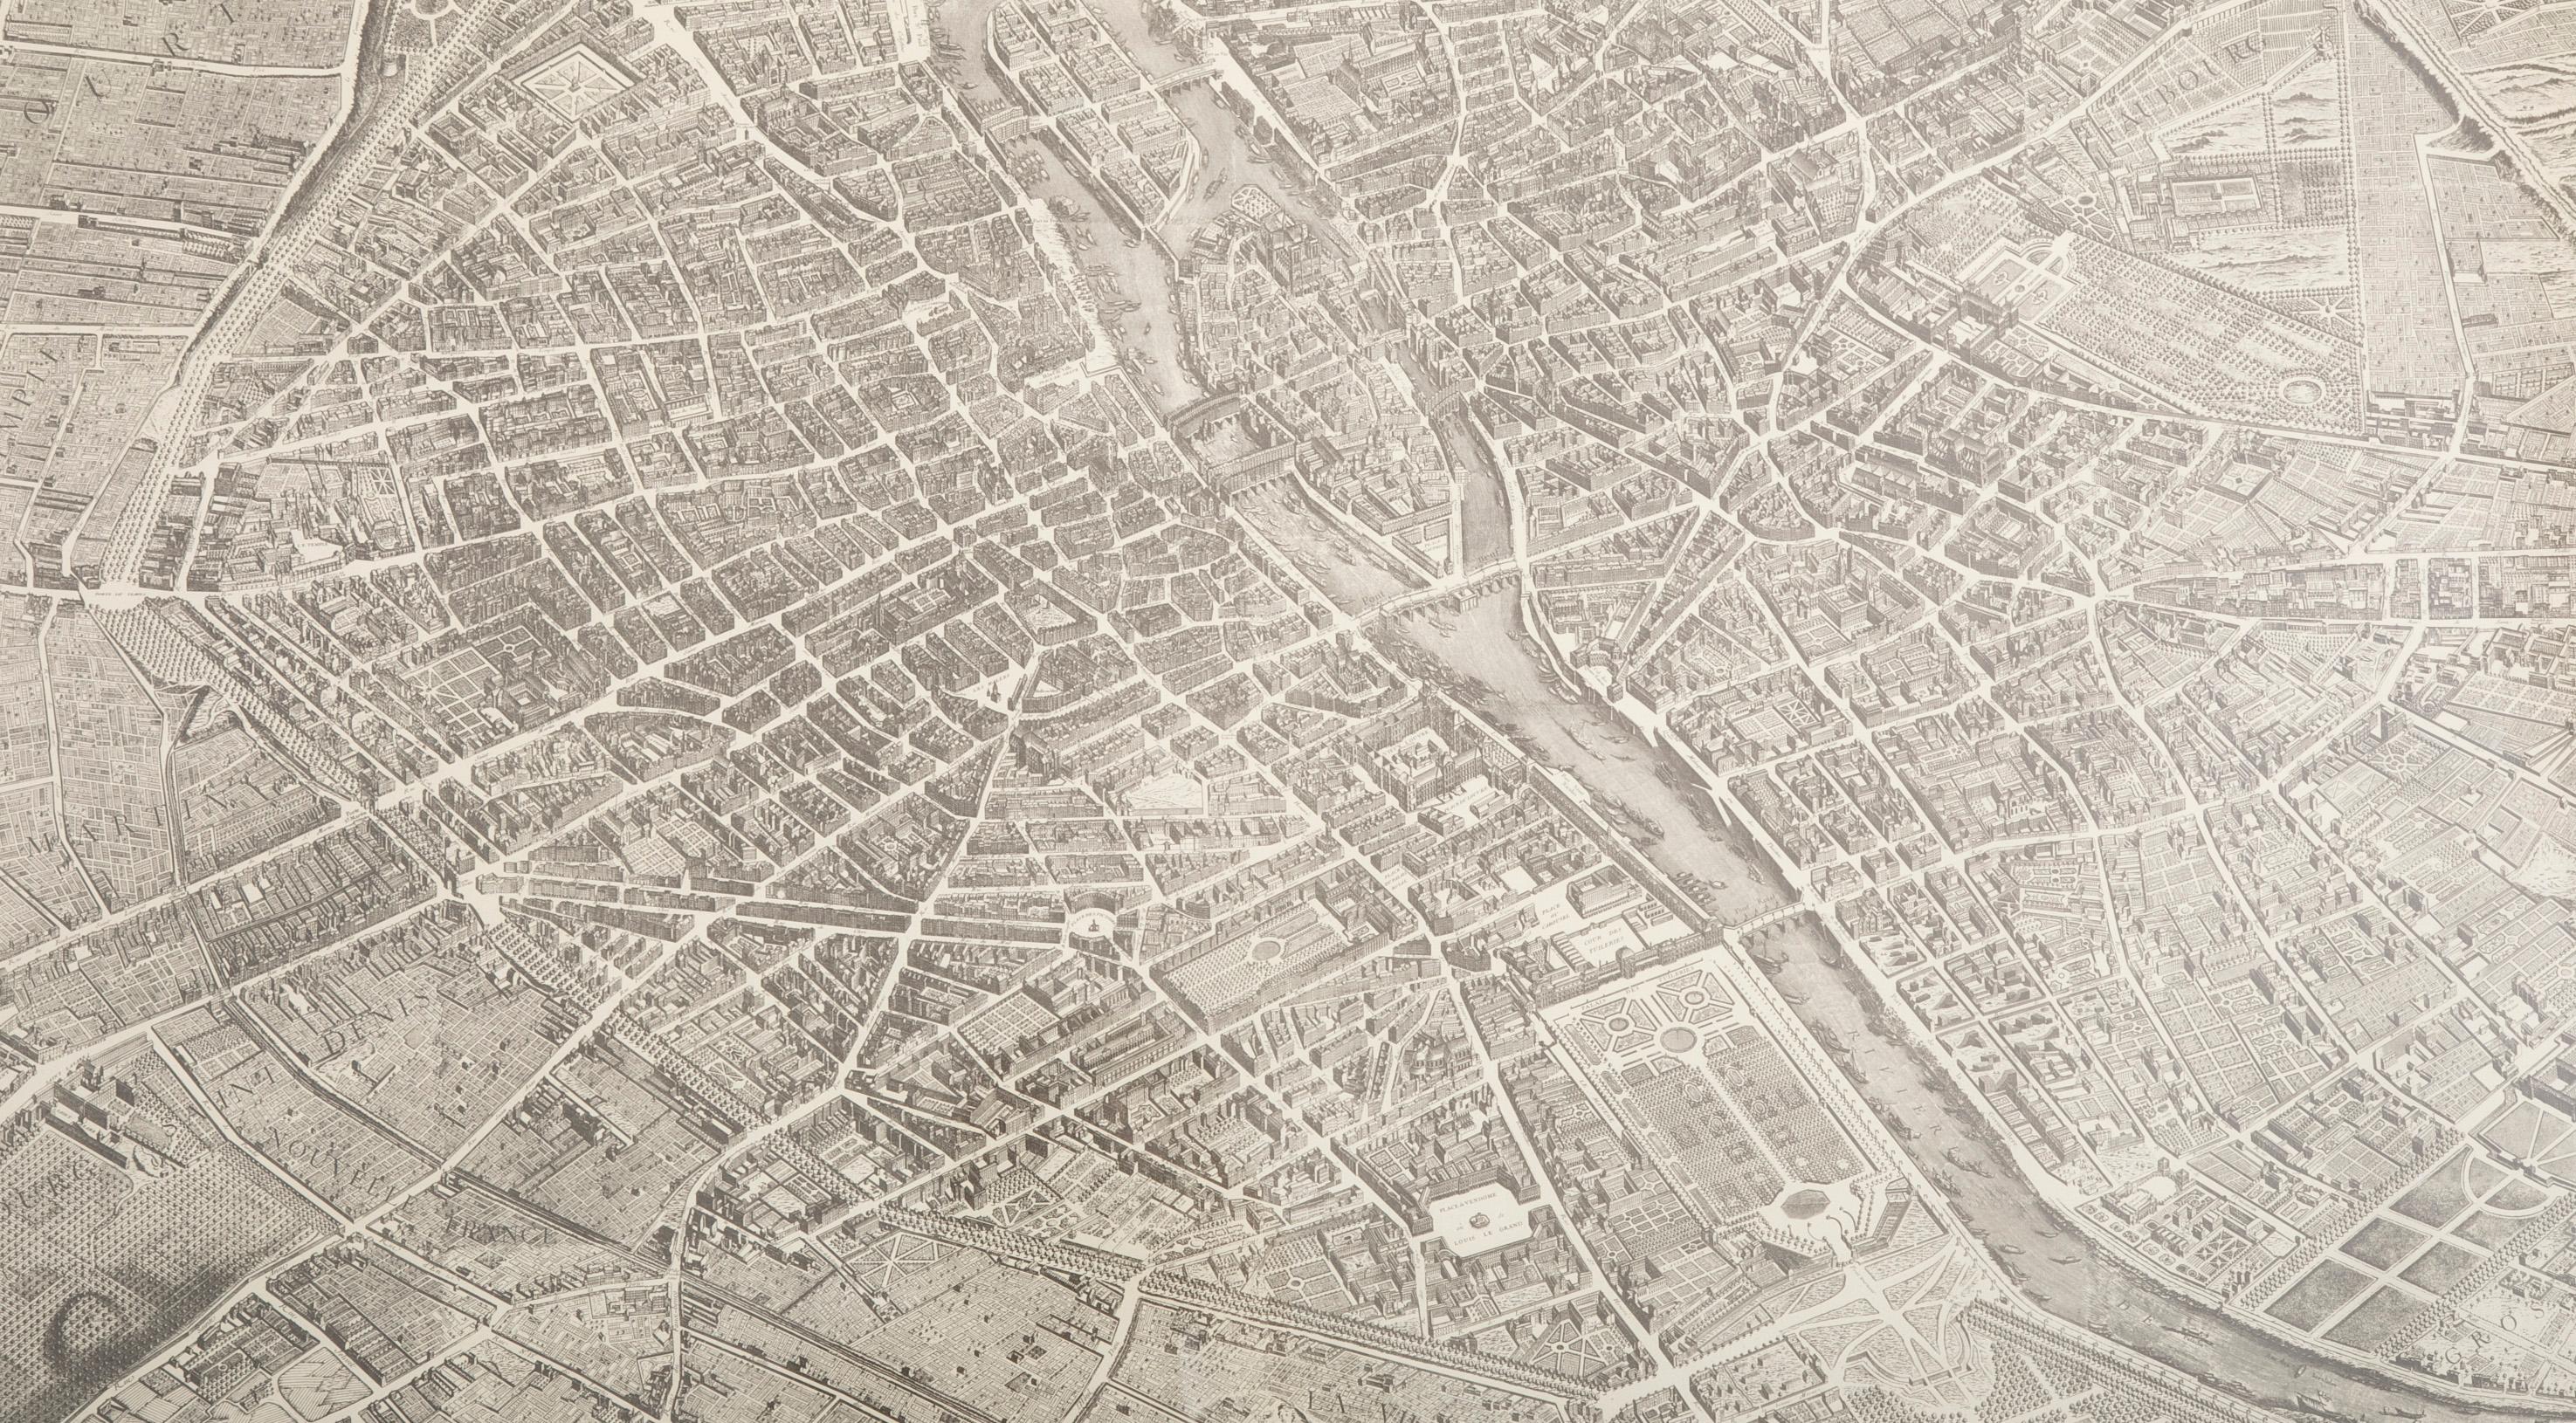 Vintage Map of Paris after the Original Turgot Plan of 1739 2